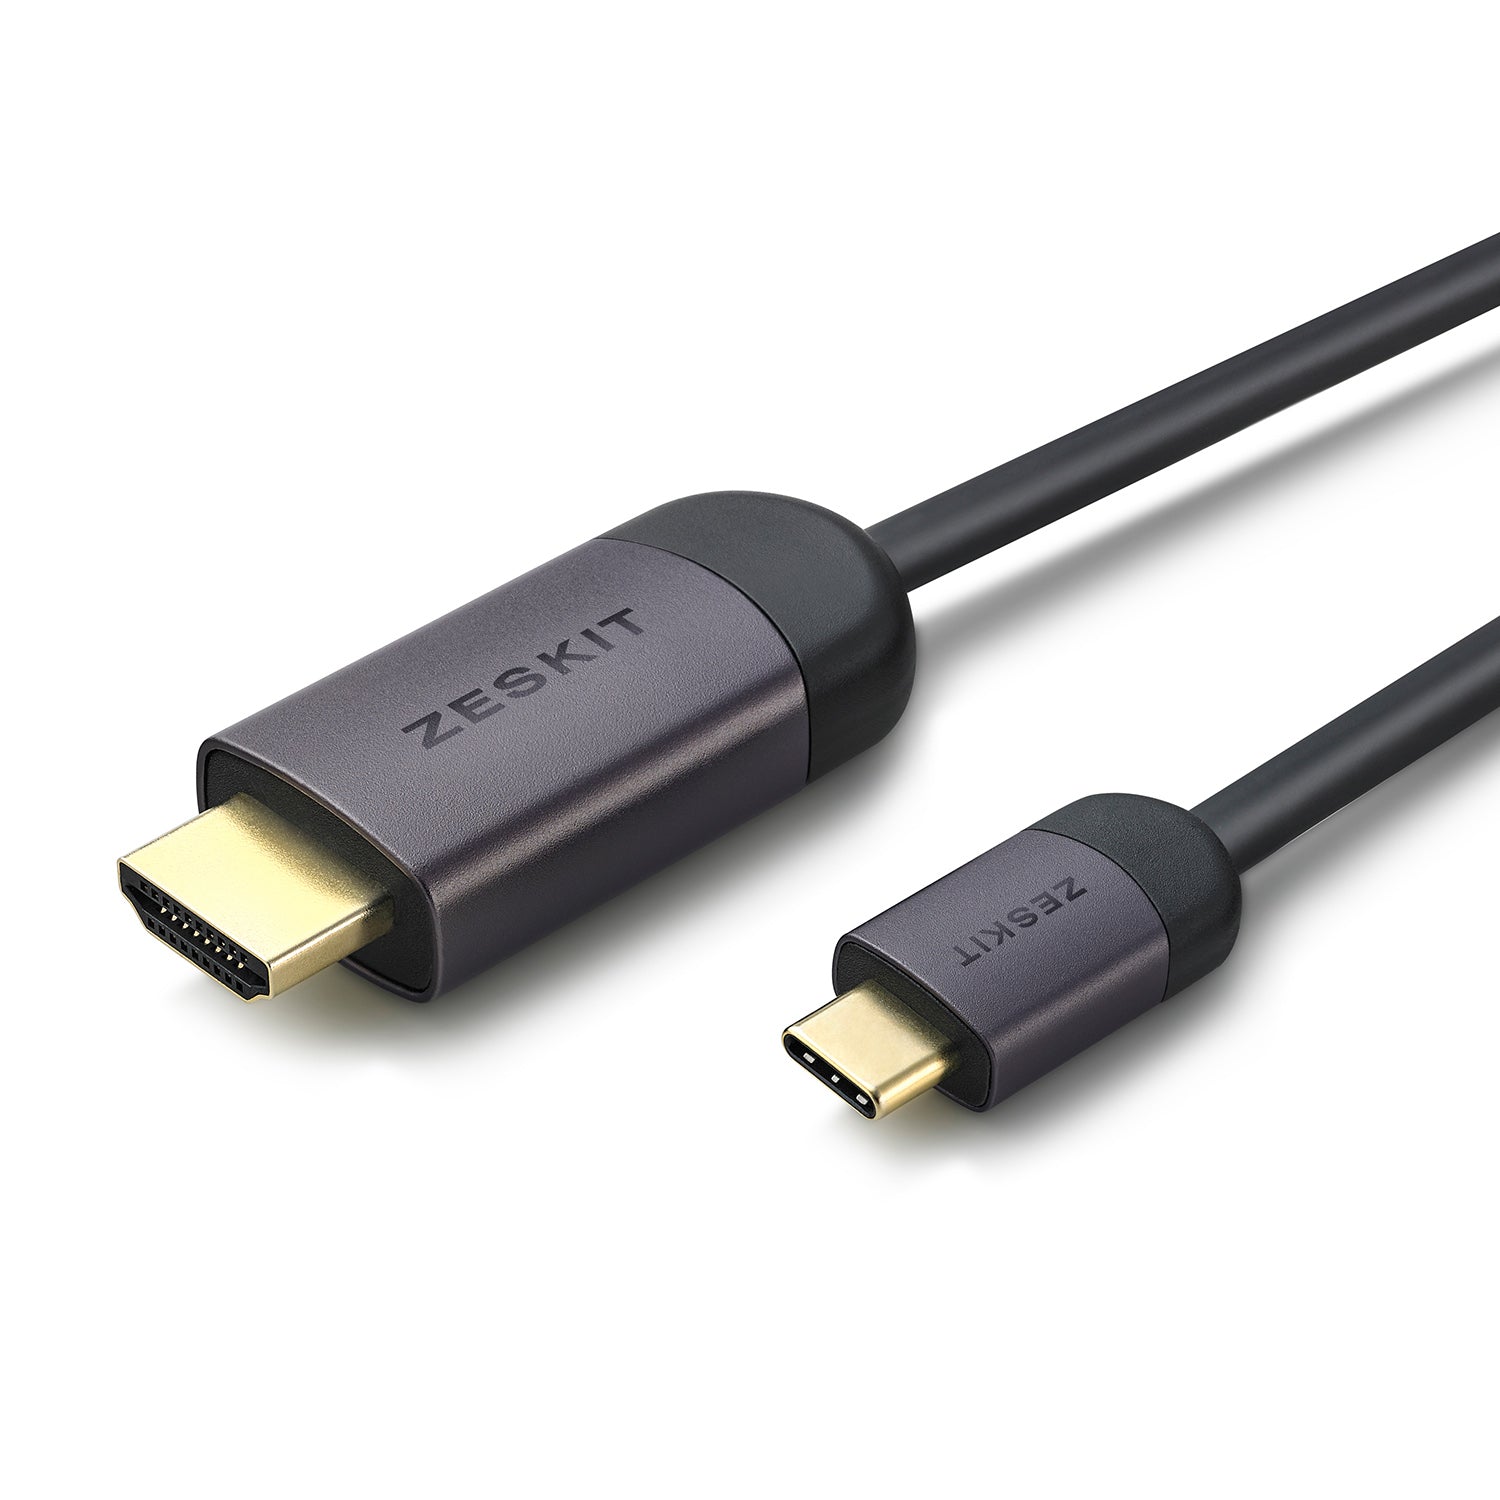 USB-C to HDMI Cable – Zeskit Shop